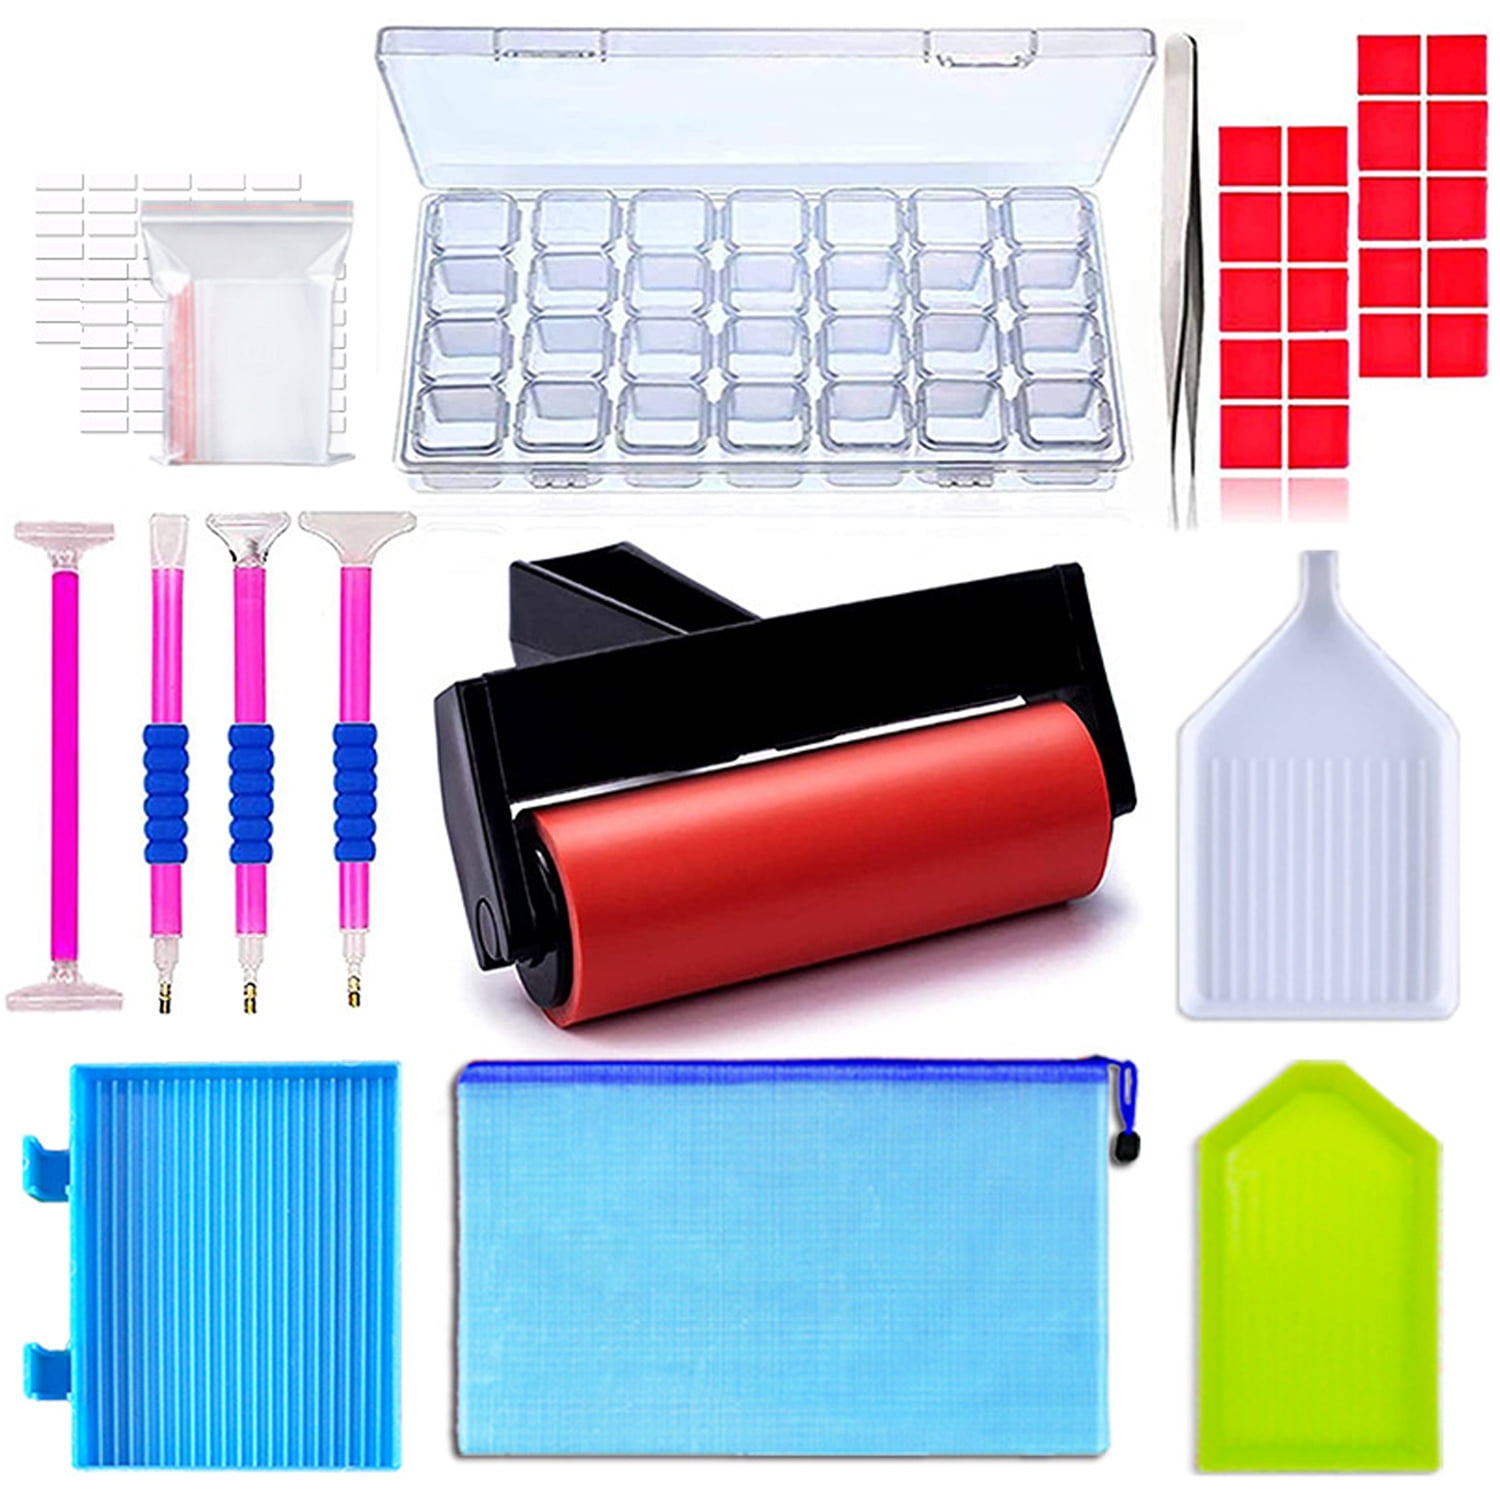 diamond painting tool kit - pen, tray, wax, tweezers, small bags